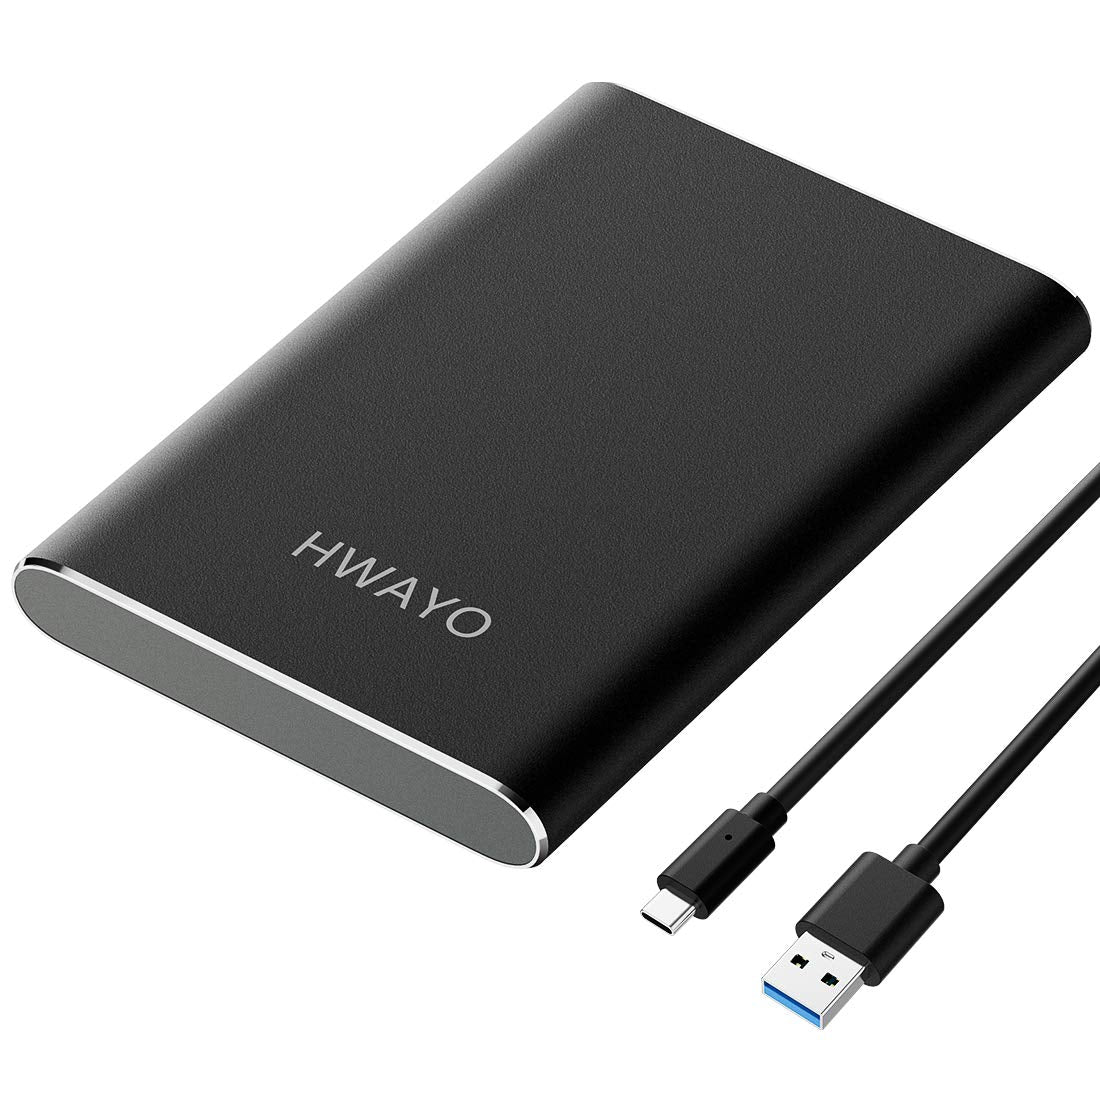 HWAYO 120GB Portable External Hard Drive, USB3.1 Gen 1 Type C Ultra Slim 2.5'' HDD Storage Compatible for PC, Desktop, Laptop, Mac, Xbox One (Black)